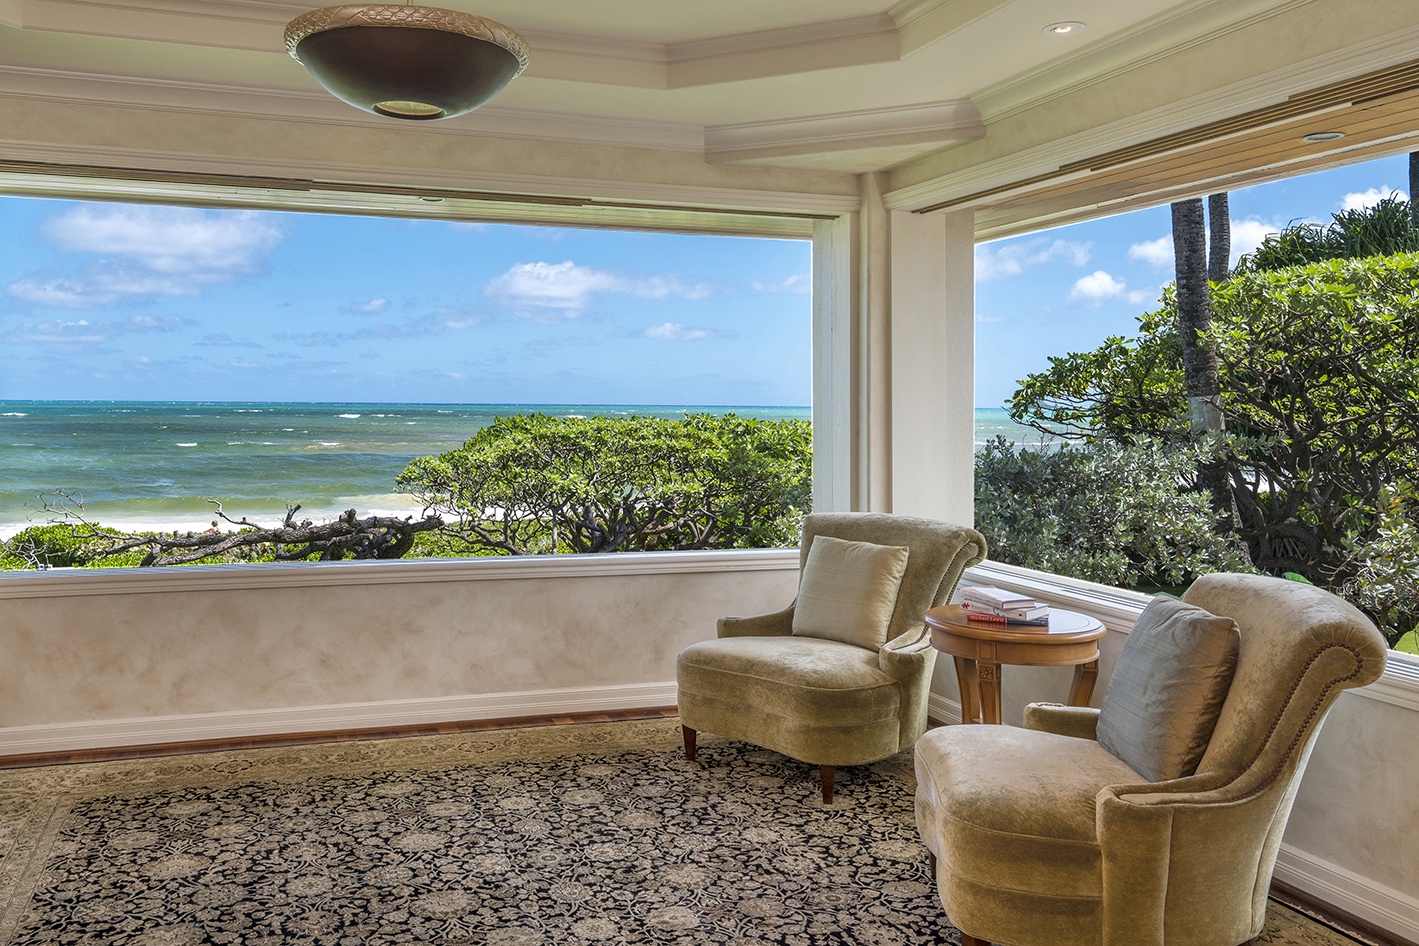 Kailua Vacation Rentals, Kailua's Kai Moena - Main house: Windows fully open and welcome the ocean breeze.